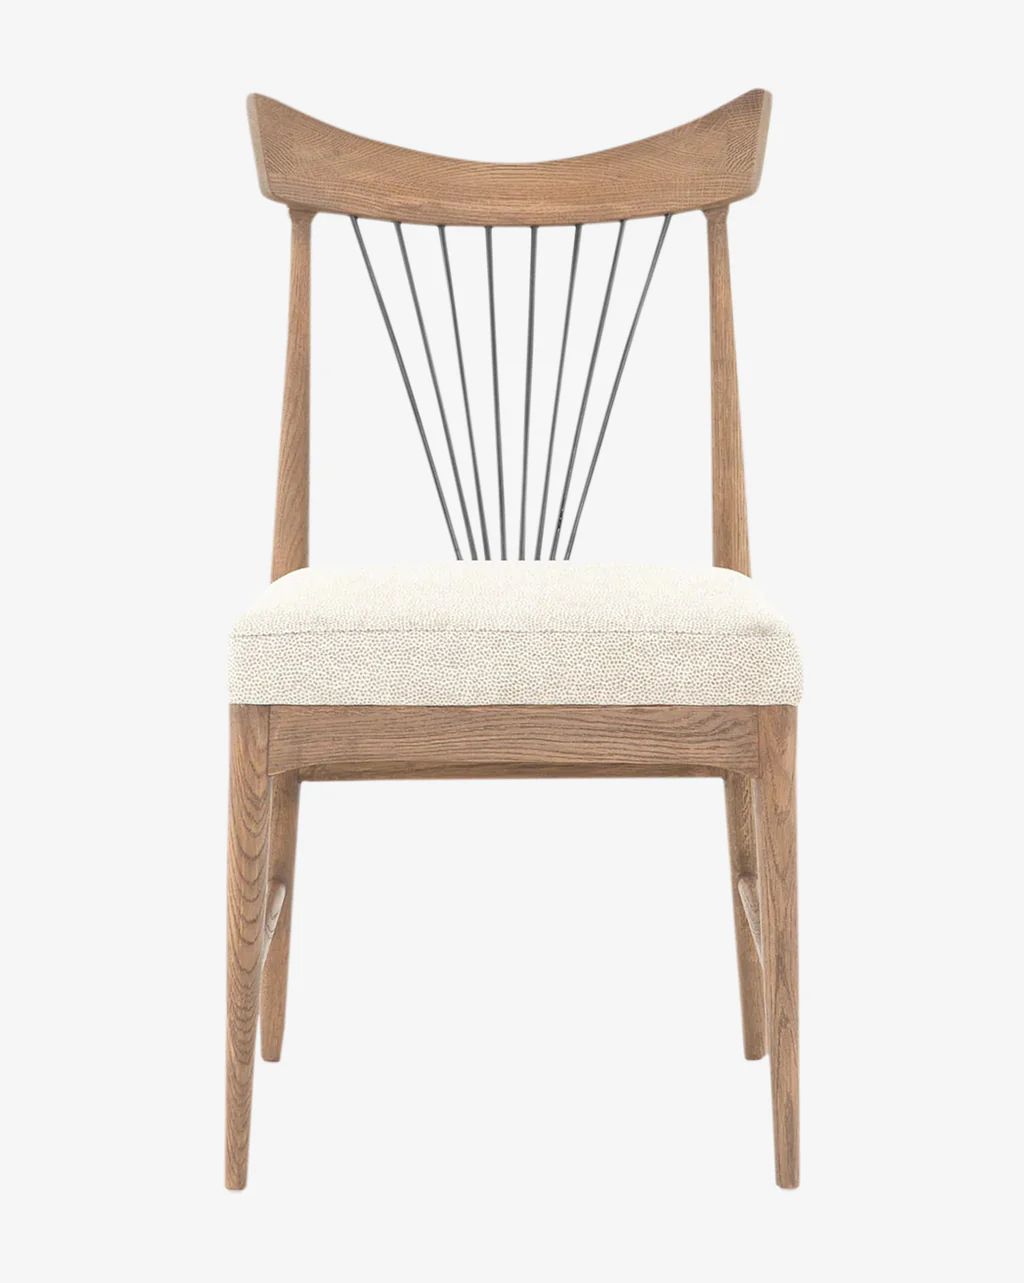 Foley Chair | McGee & Co.